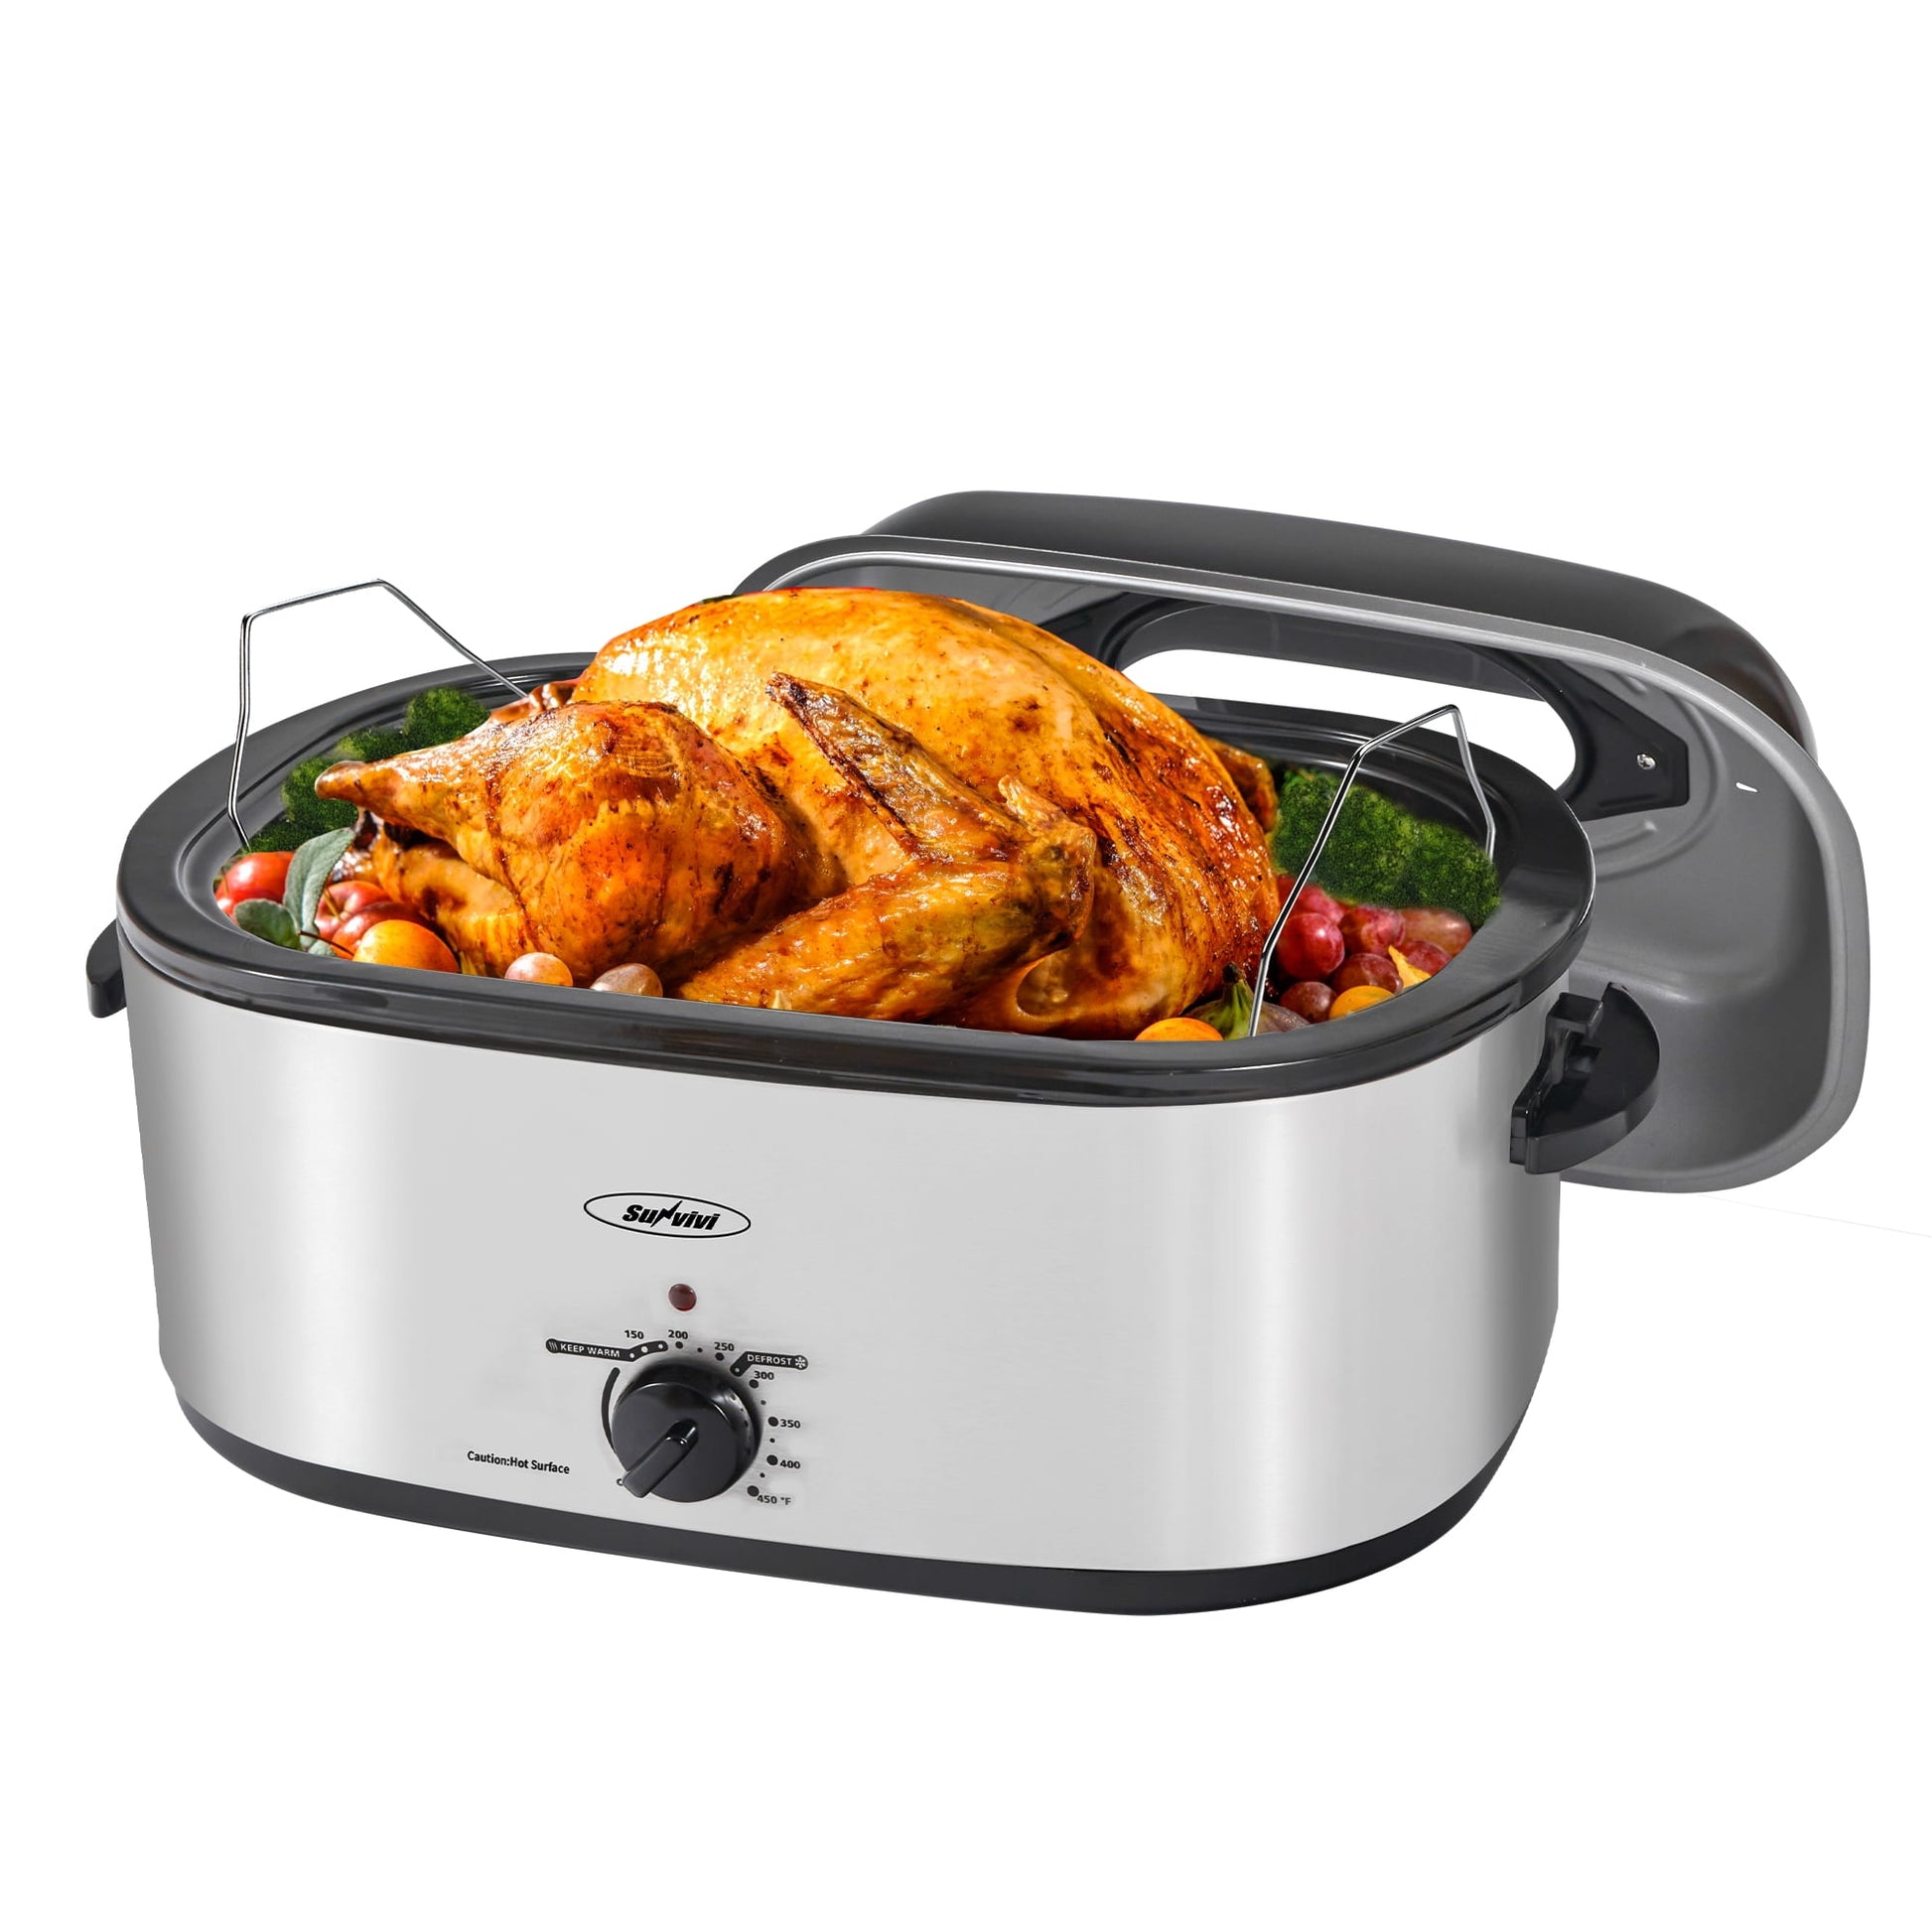 20 Quart Turkey Roaster Oven & Triple Slow Cooker Food Warmer